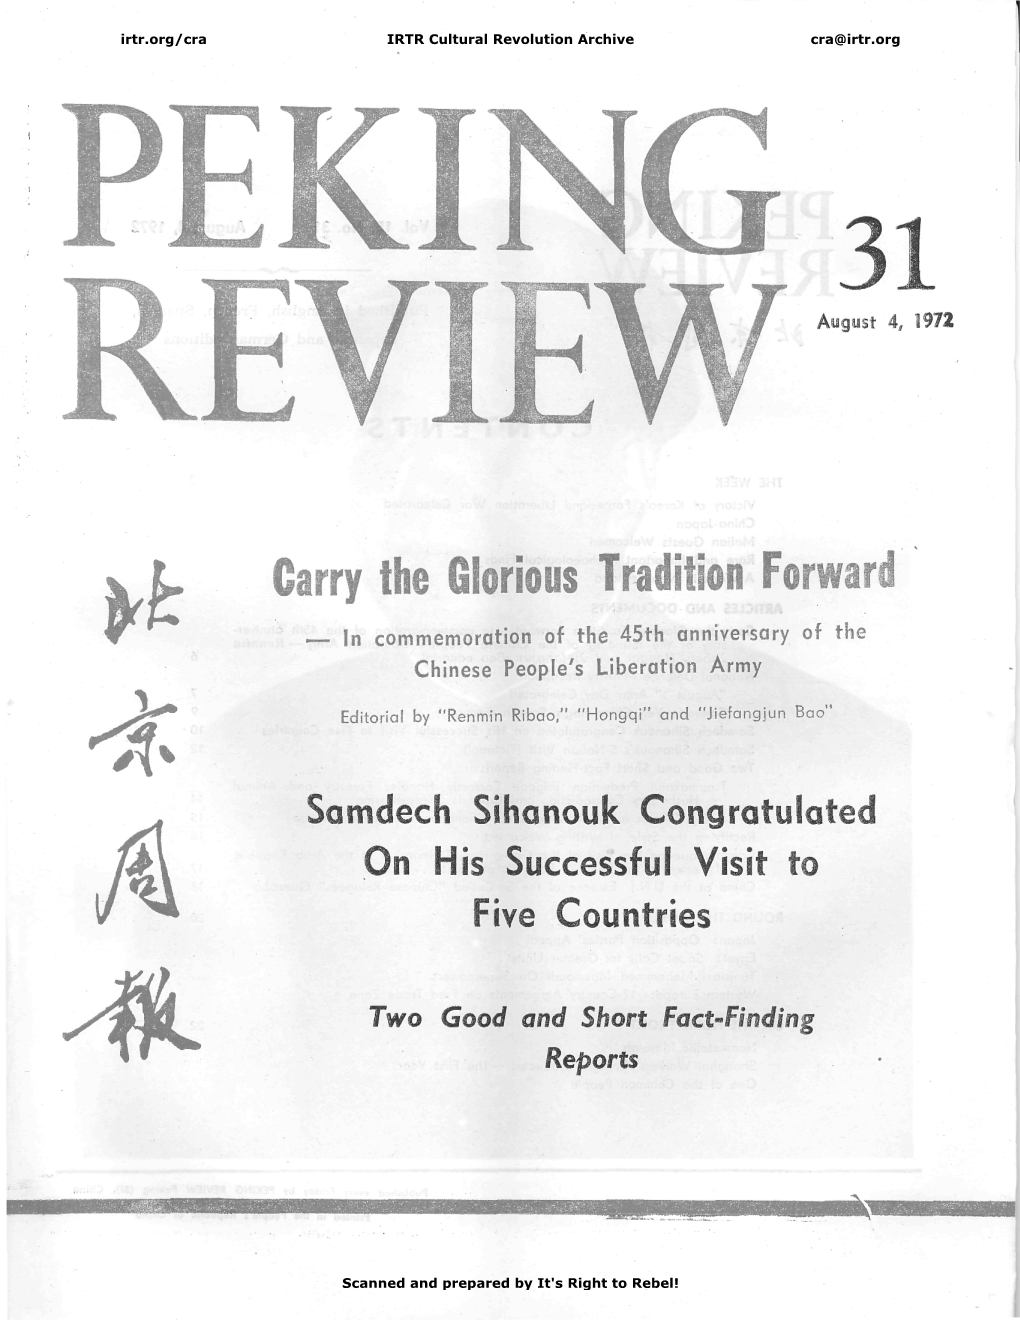 PEKING REVIEW Peking (37), China Post Office Registration No